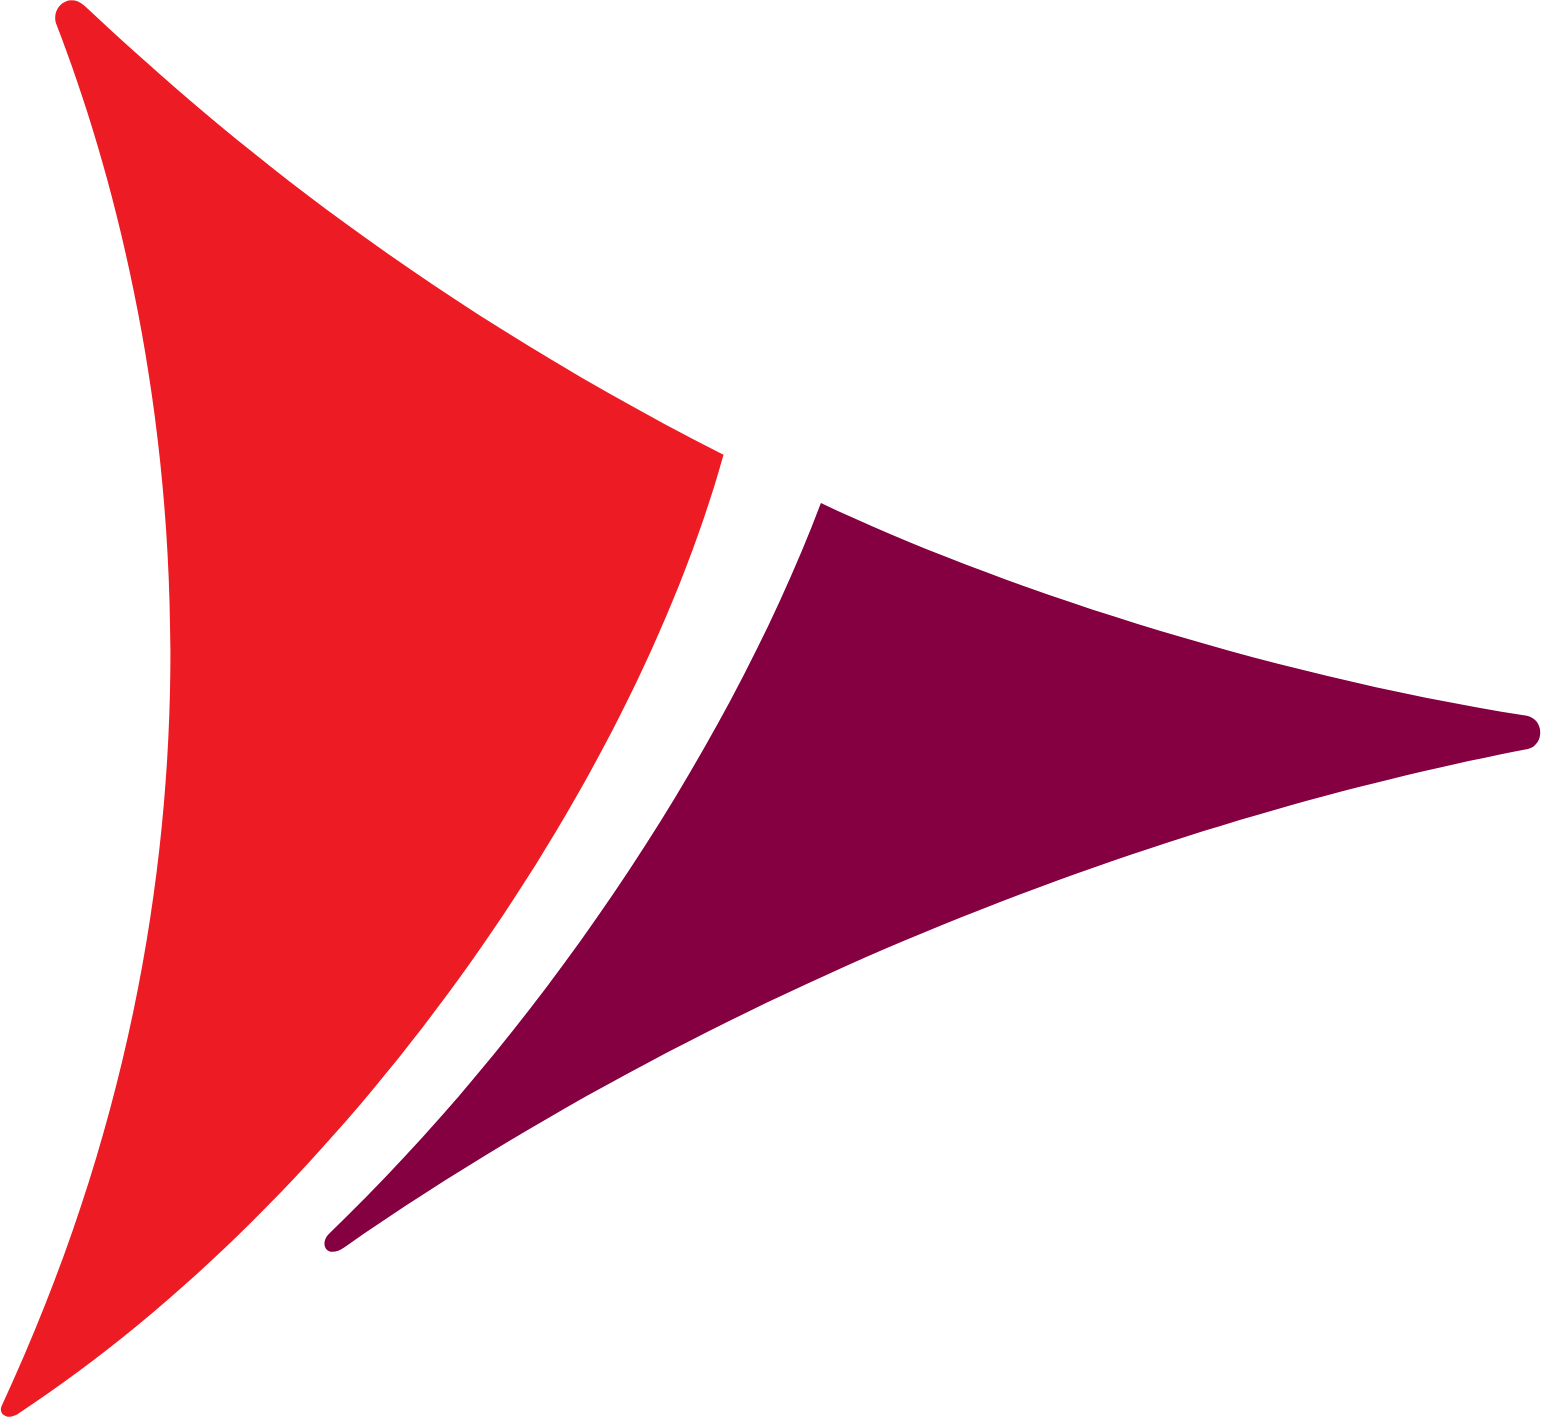 Grupo Supervielle logo (transparent PNG)